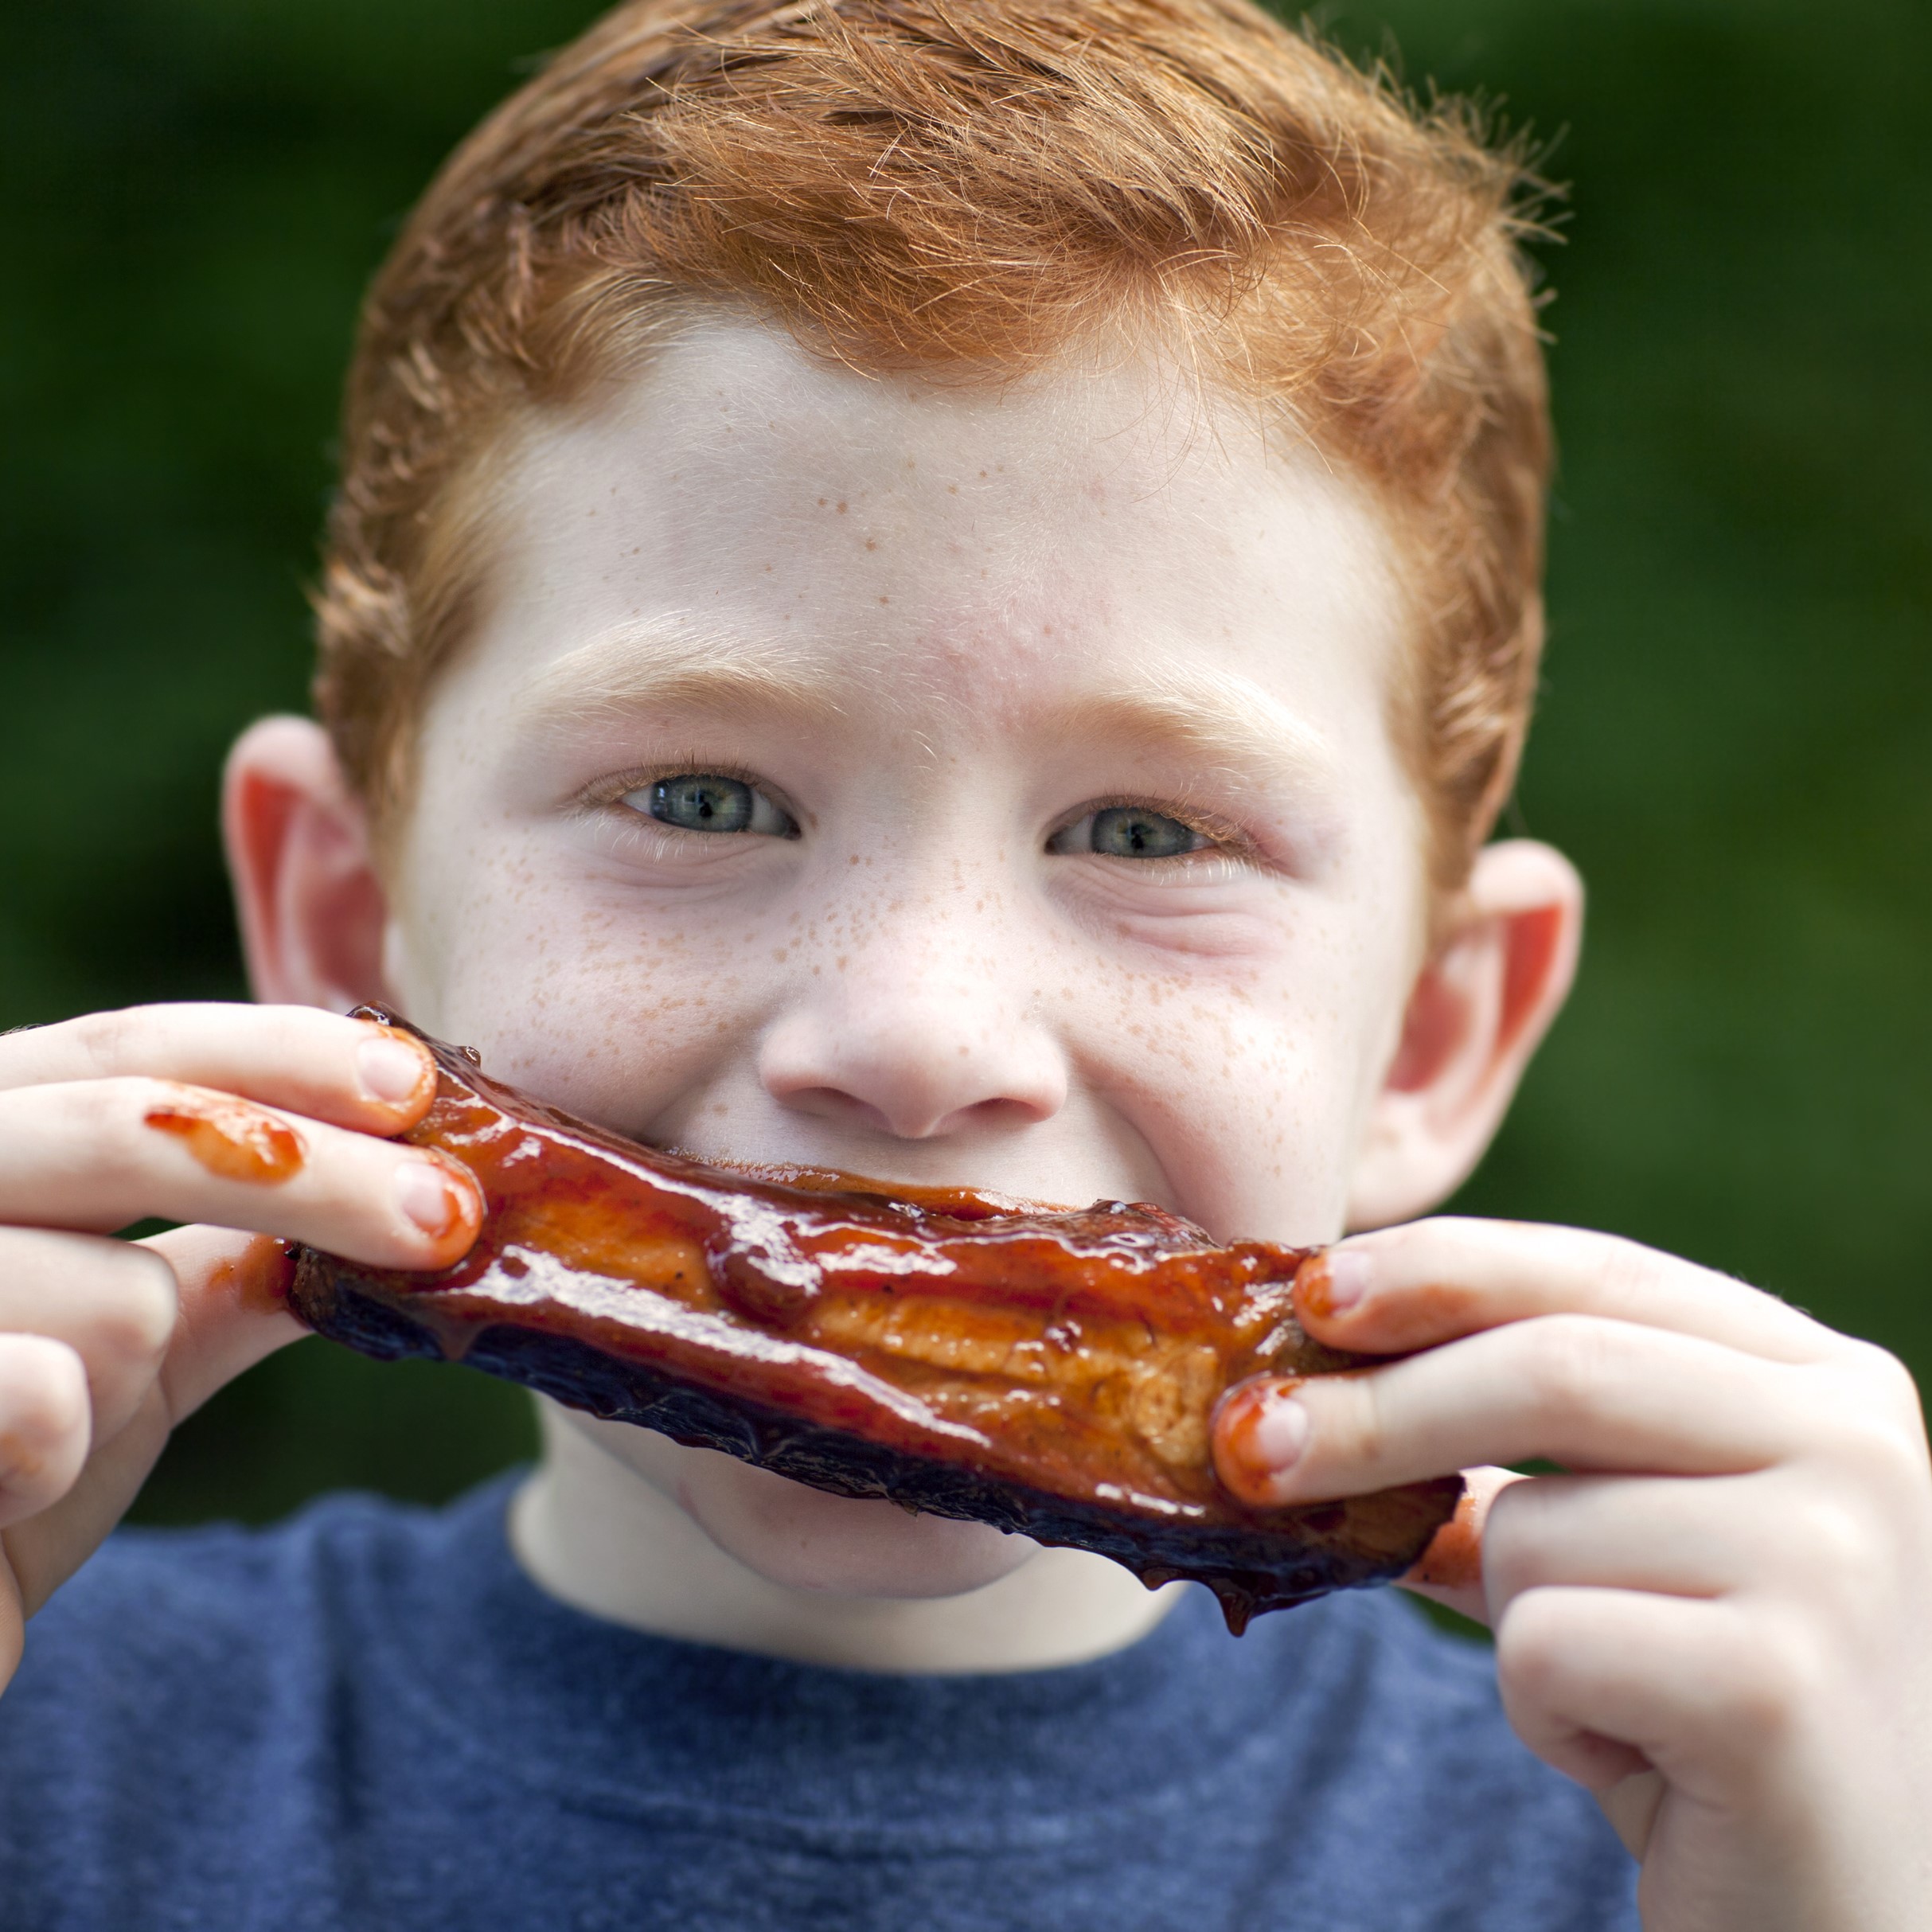 Young boy enjoying barbeque food